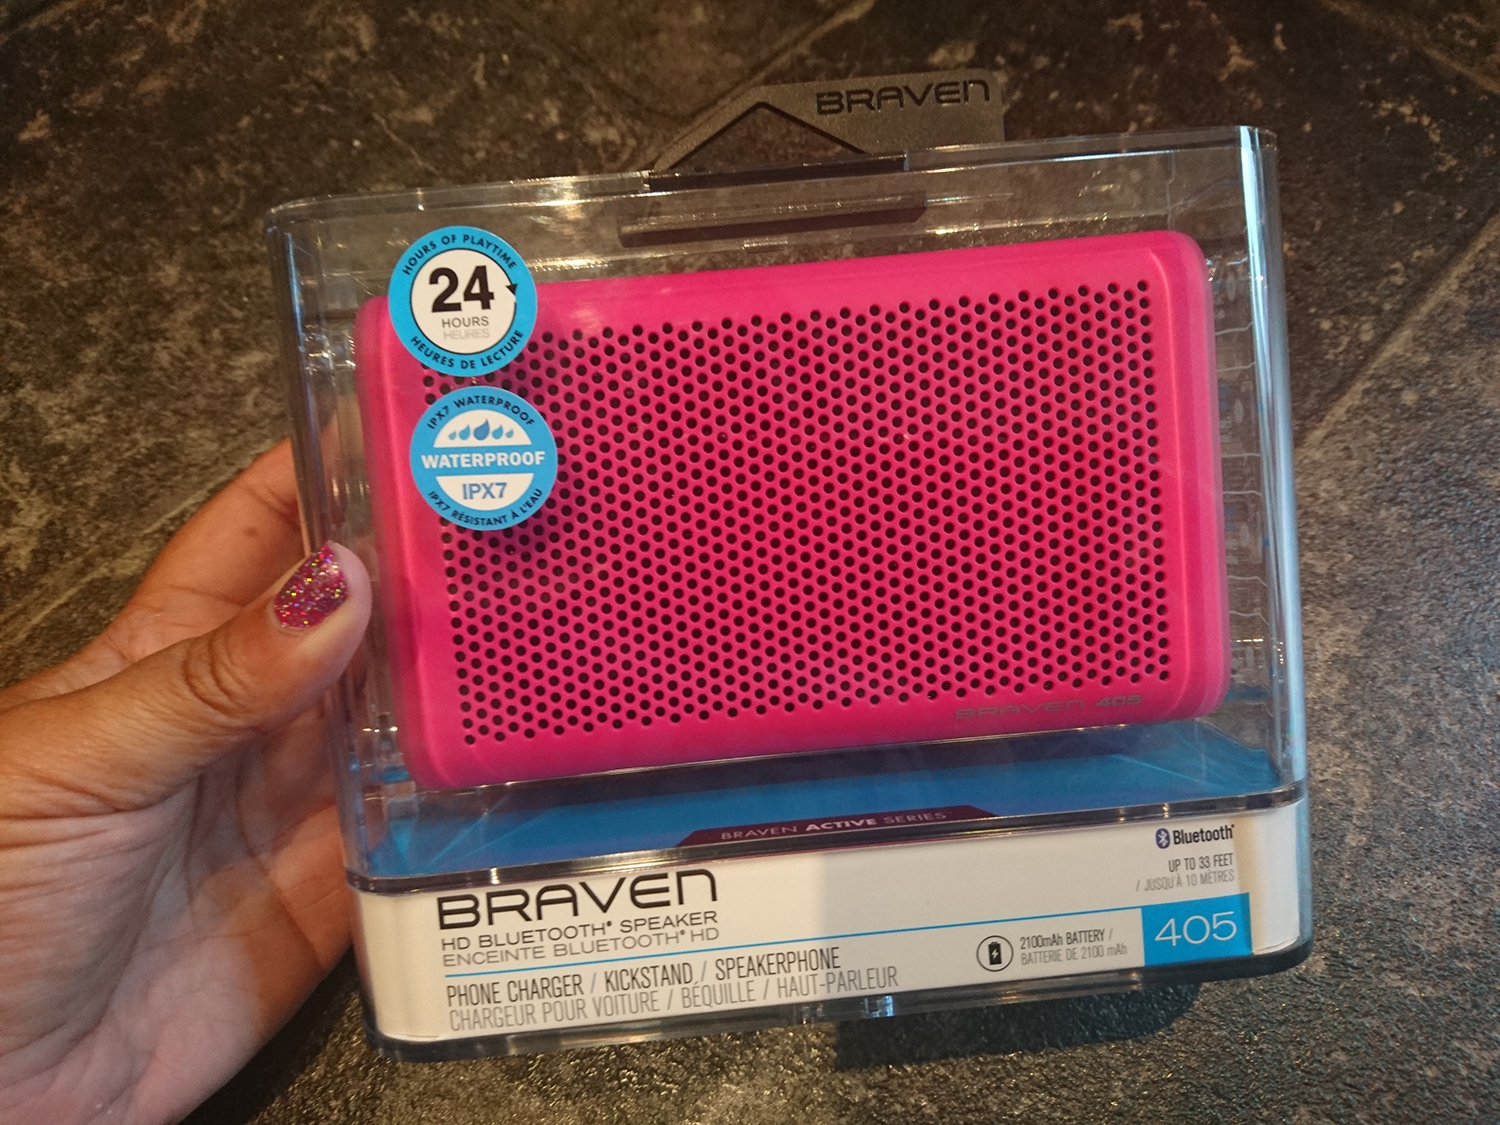 Braven Active Portable Bluetooth Speaker, Black, 405